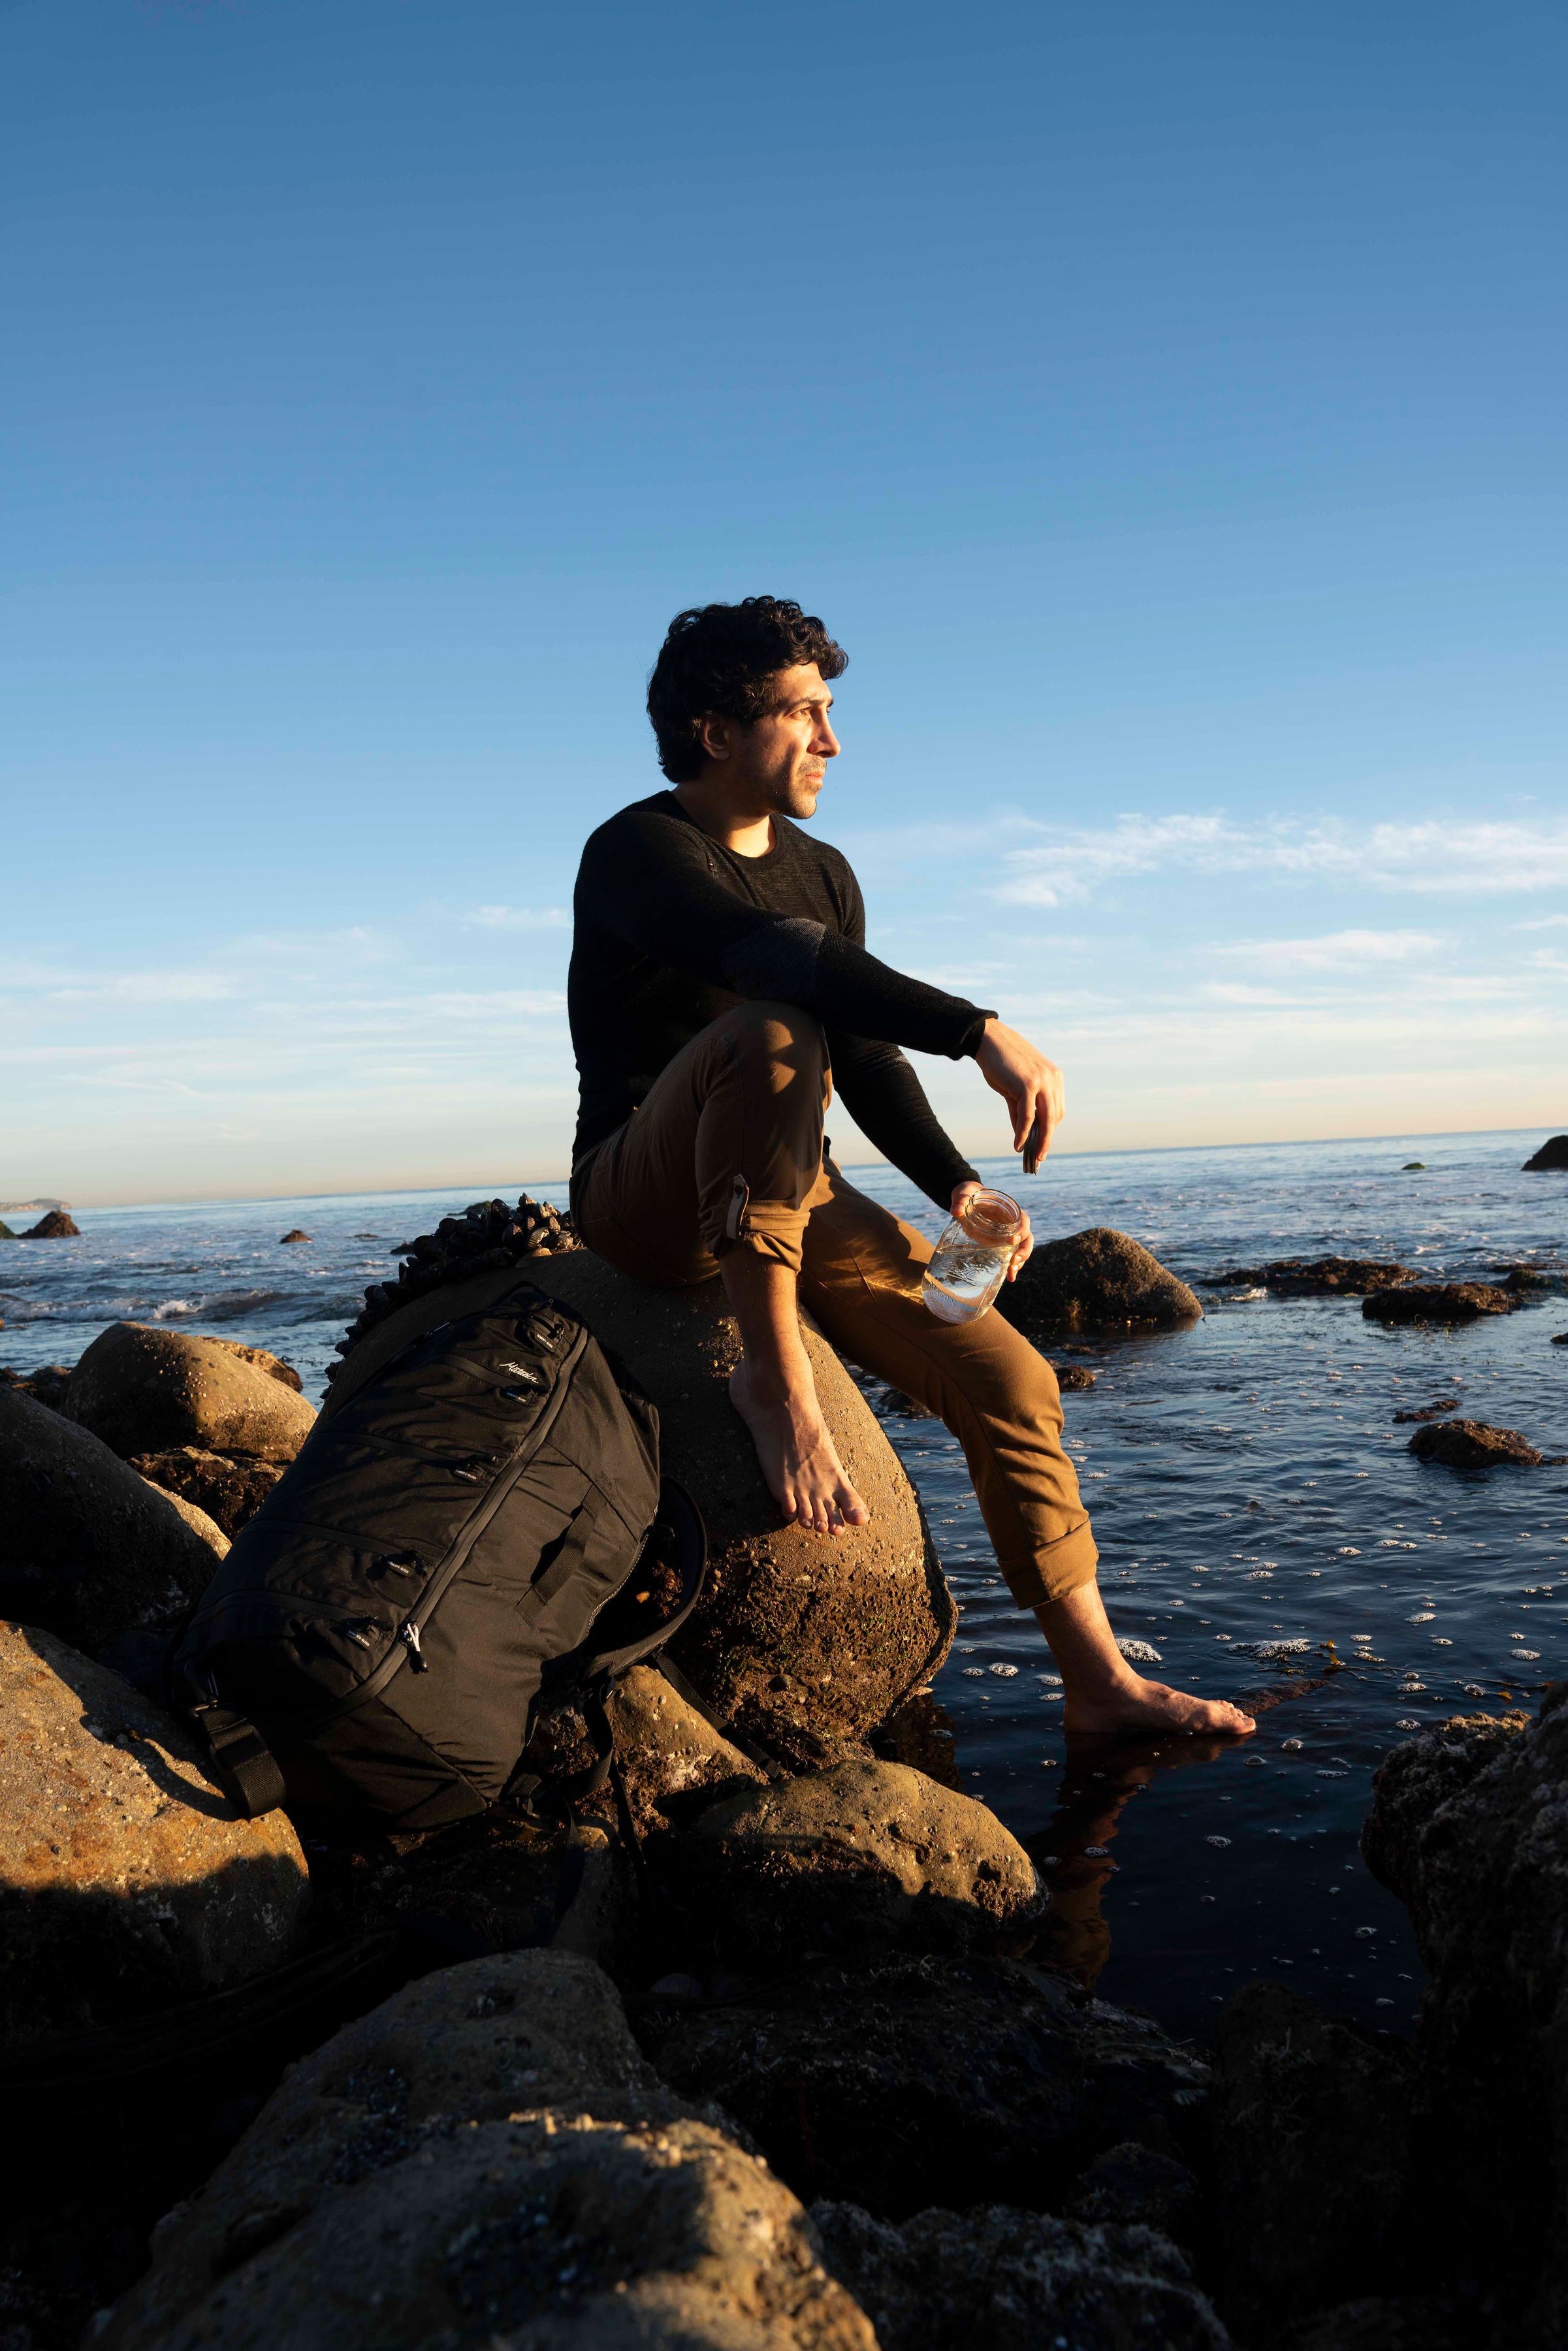 Michael Zervos sitting on a rock in the Pacific Ocean, coastline